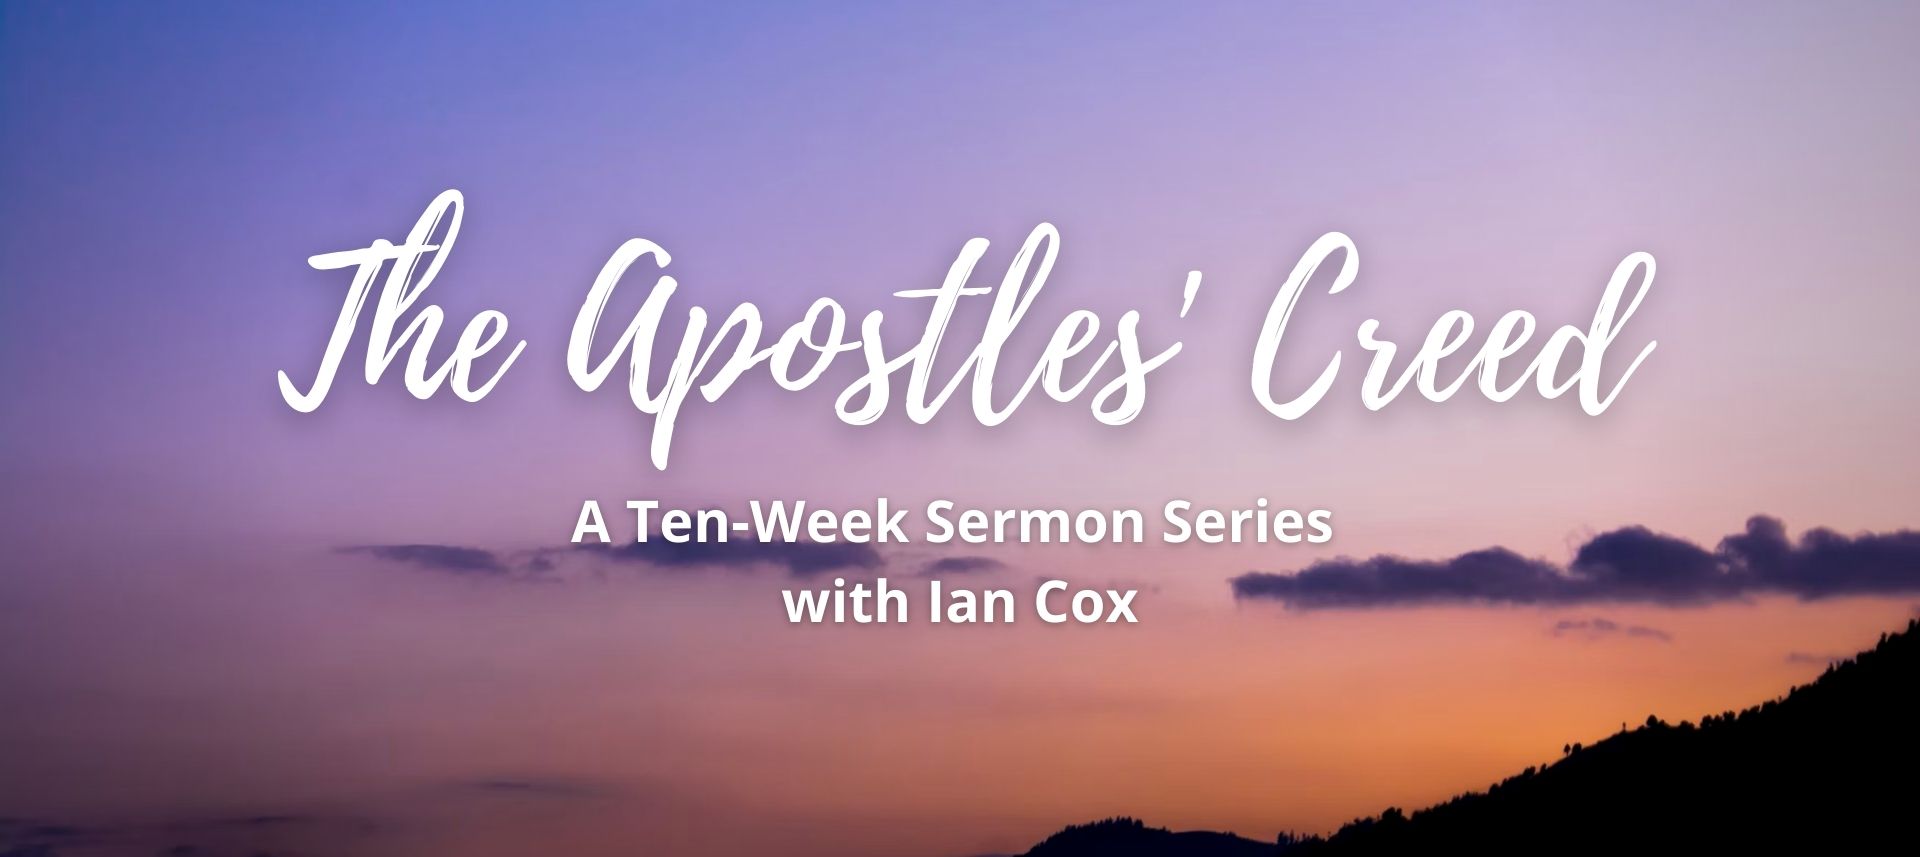 The Apostles' Creed - A ten-week sermon series with Ian Cox